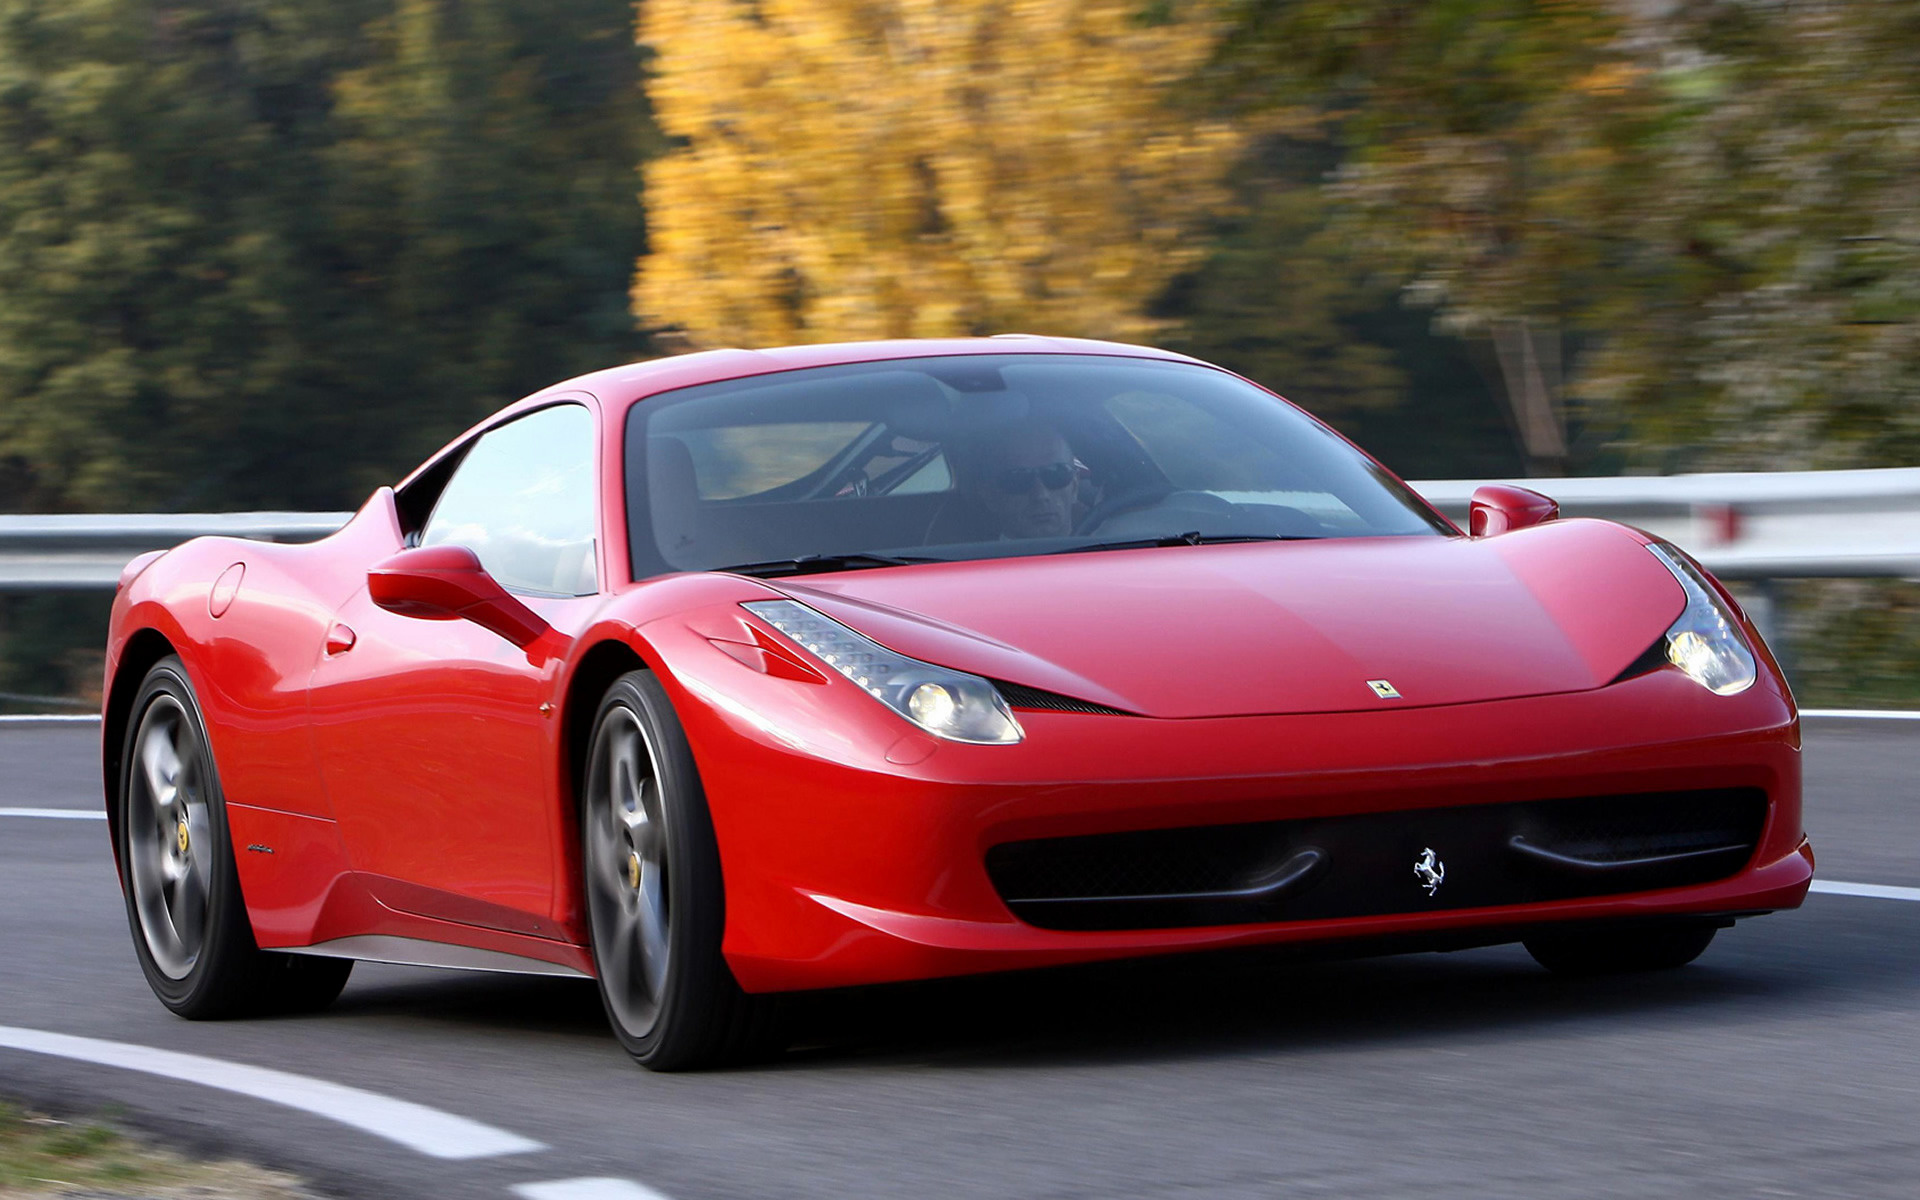 2009 Ferrari 458 Italia - Wallpapers and HD Images | Car Pixel